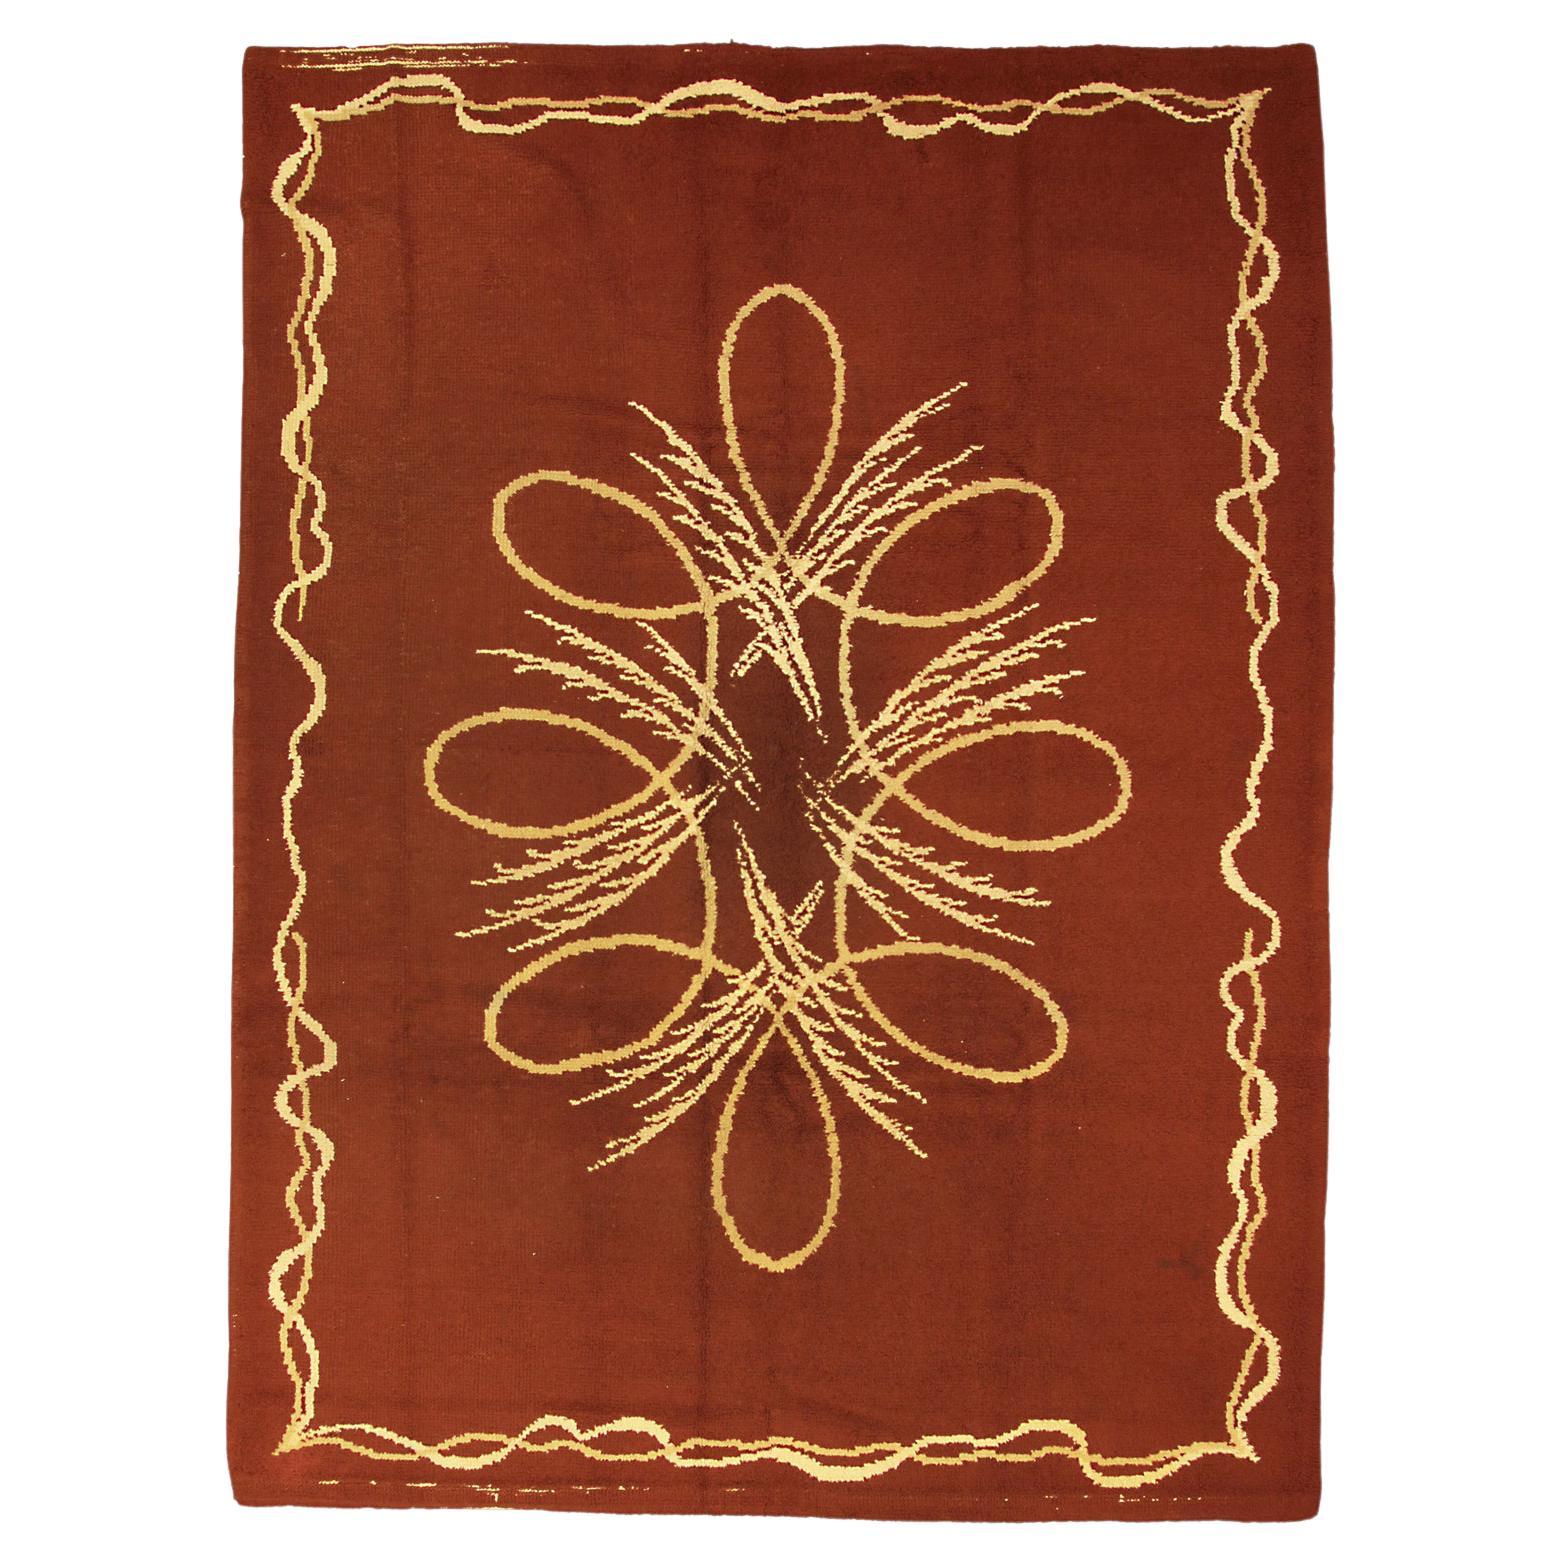 European Carpet Minimalist Design Brown Color, ca. 1950